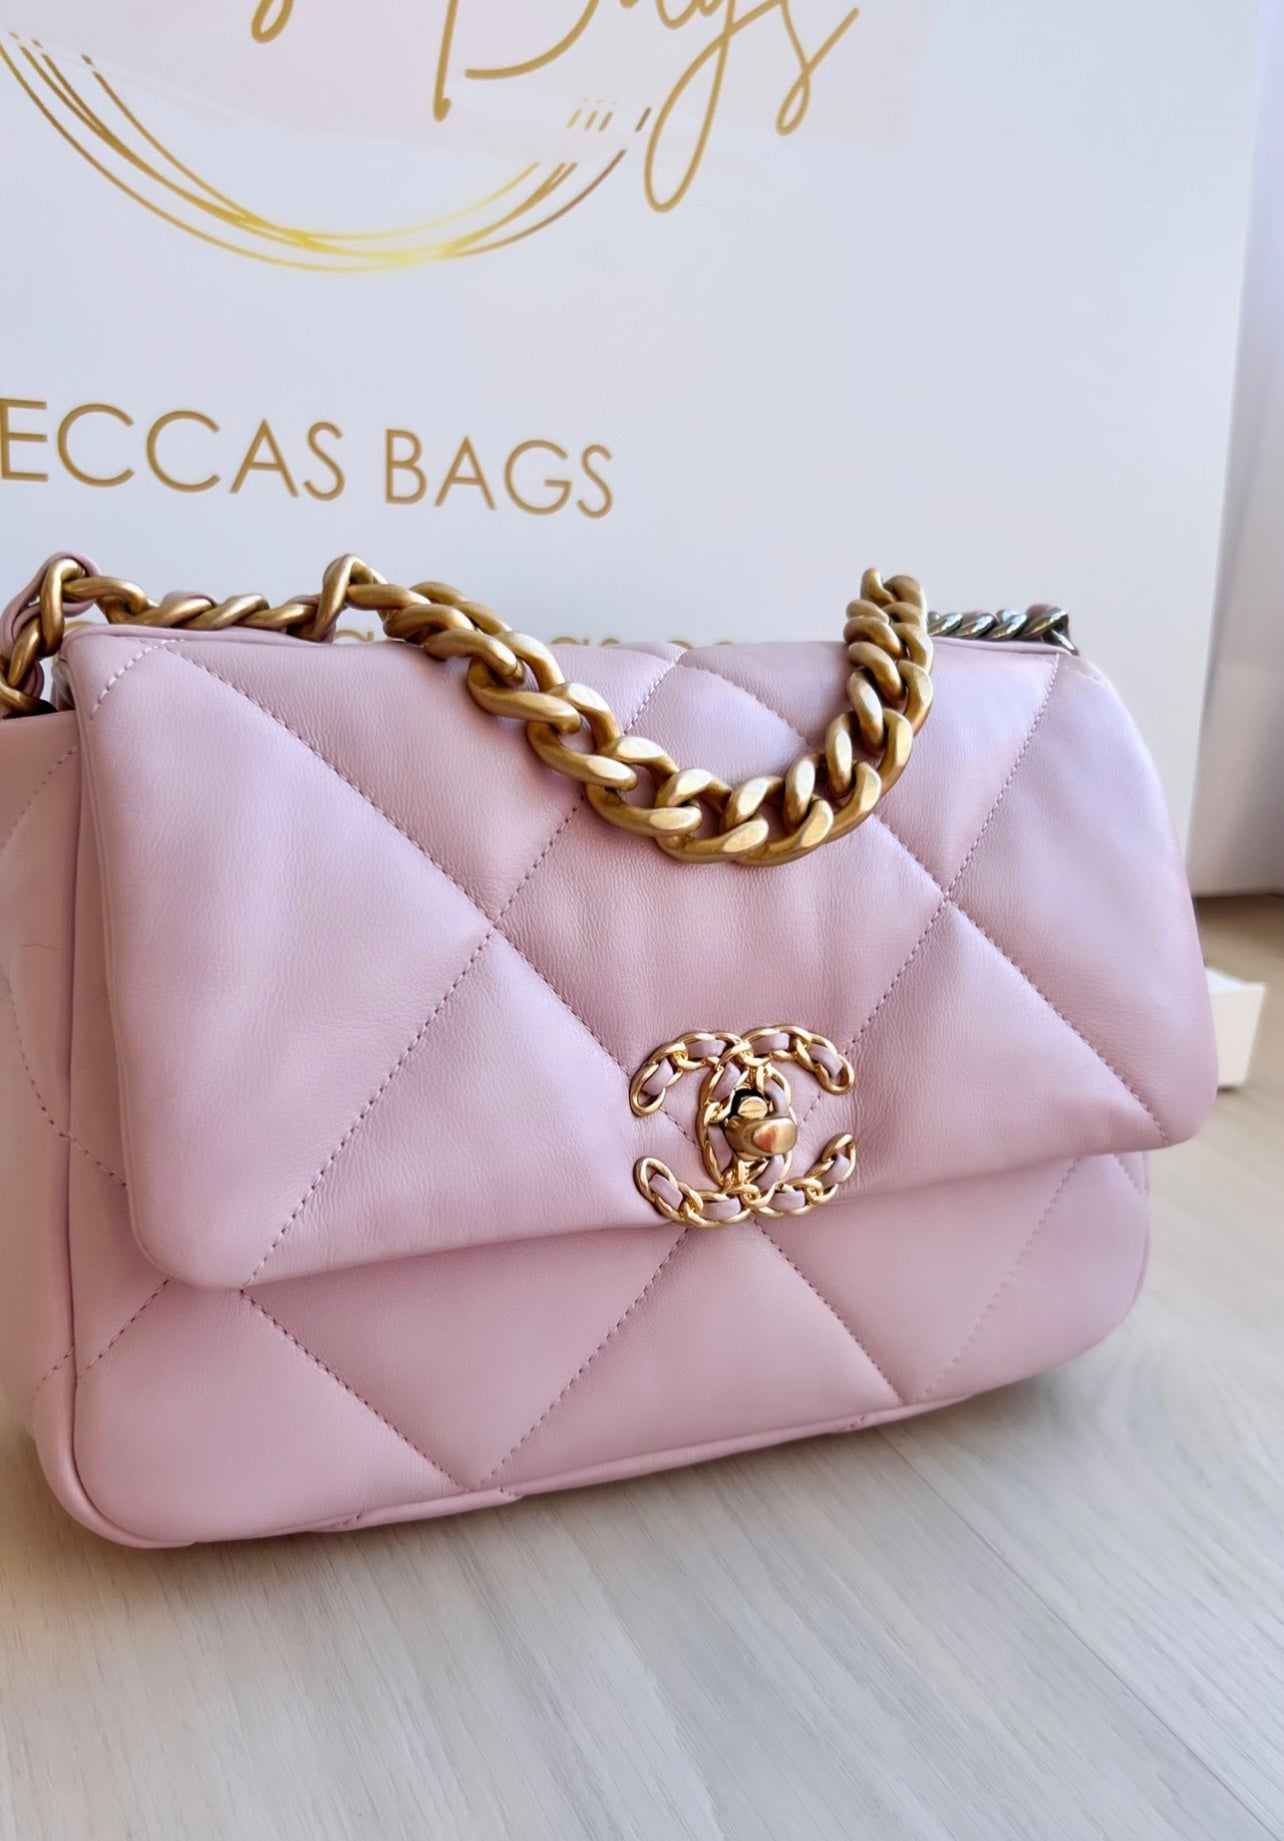 Chanel 19 Bag – Beccas Bags